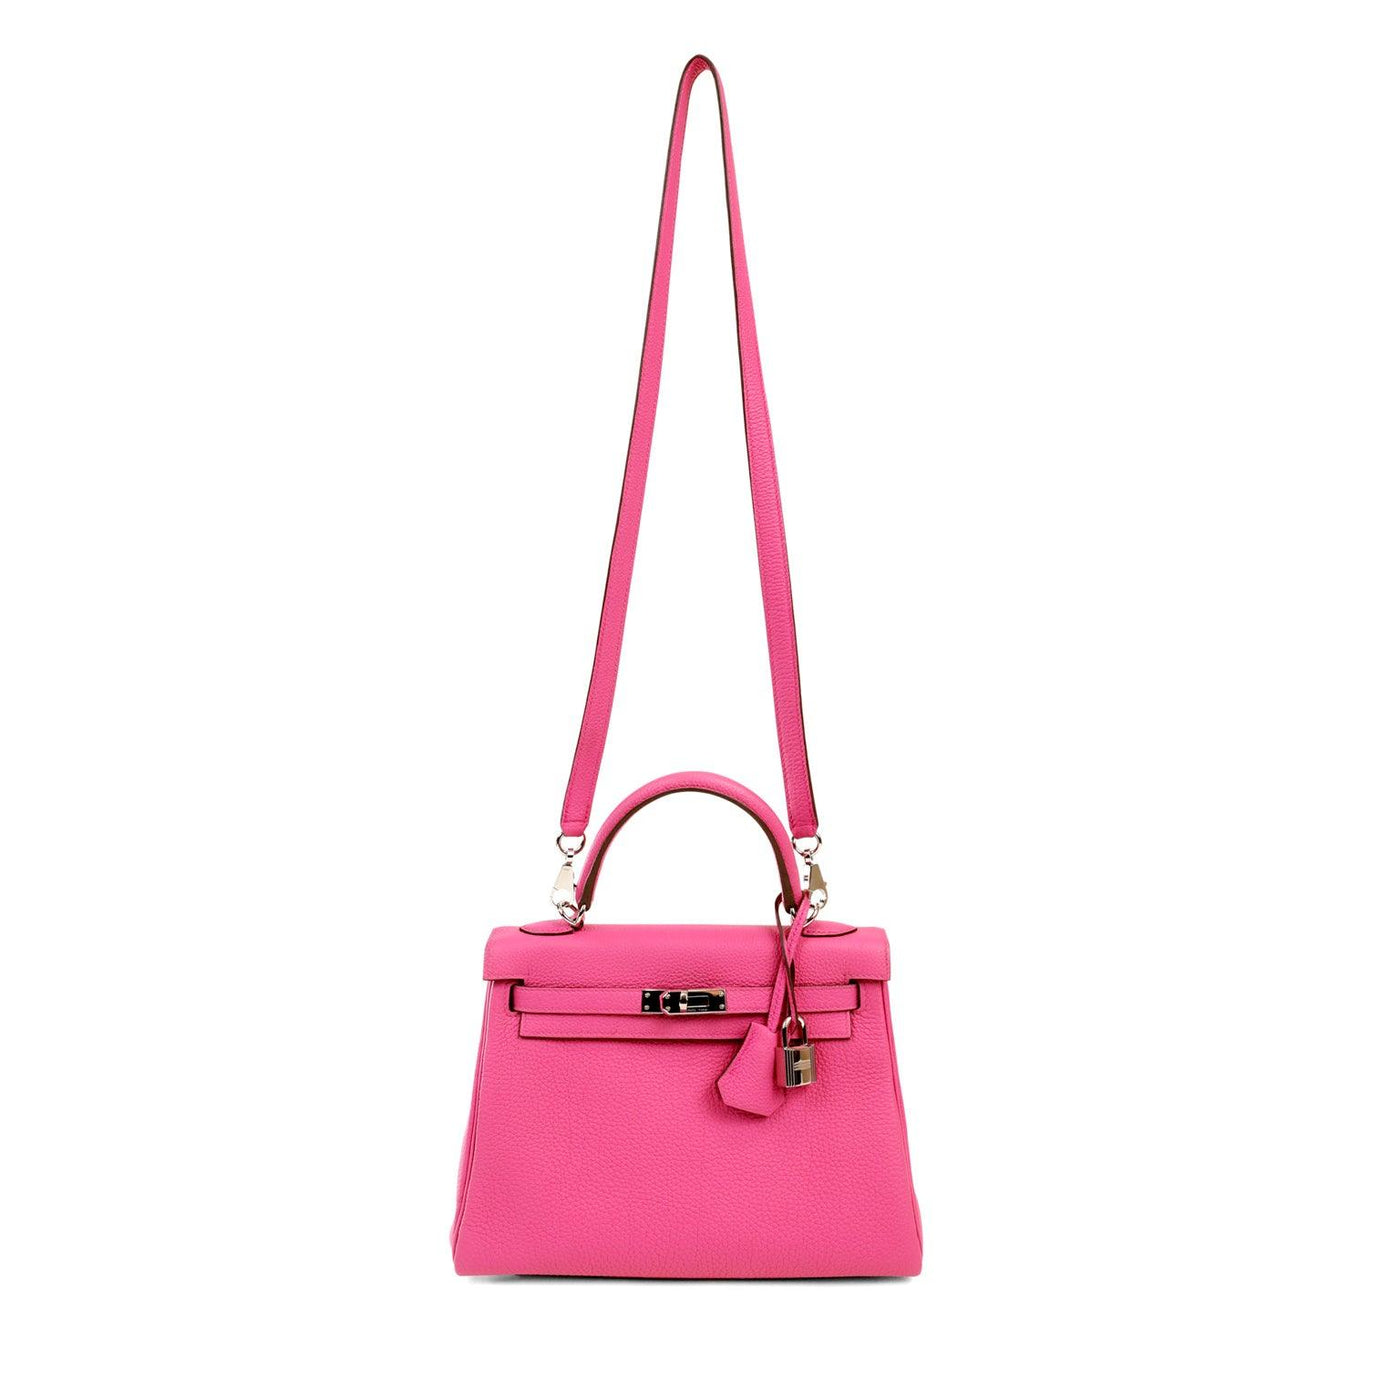 Hermès 25cm Pink Magnolia Togo Kelly with Palladium Hardware - Only Authentics